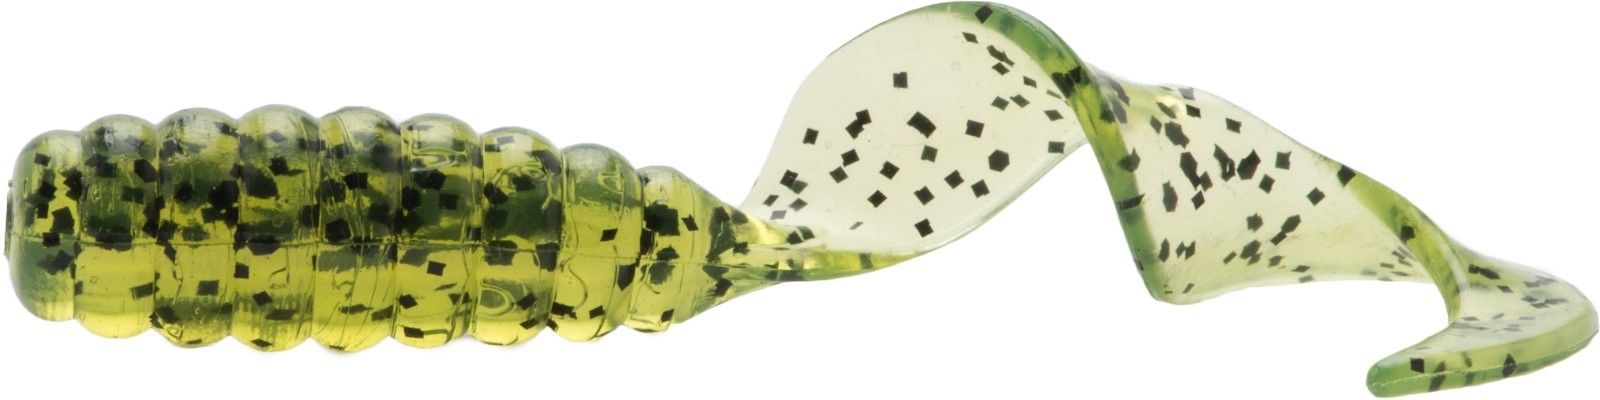 Zman Grubz 2.5 inch Grubs Soft Plastic Fishing Lure